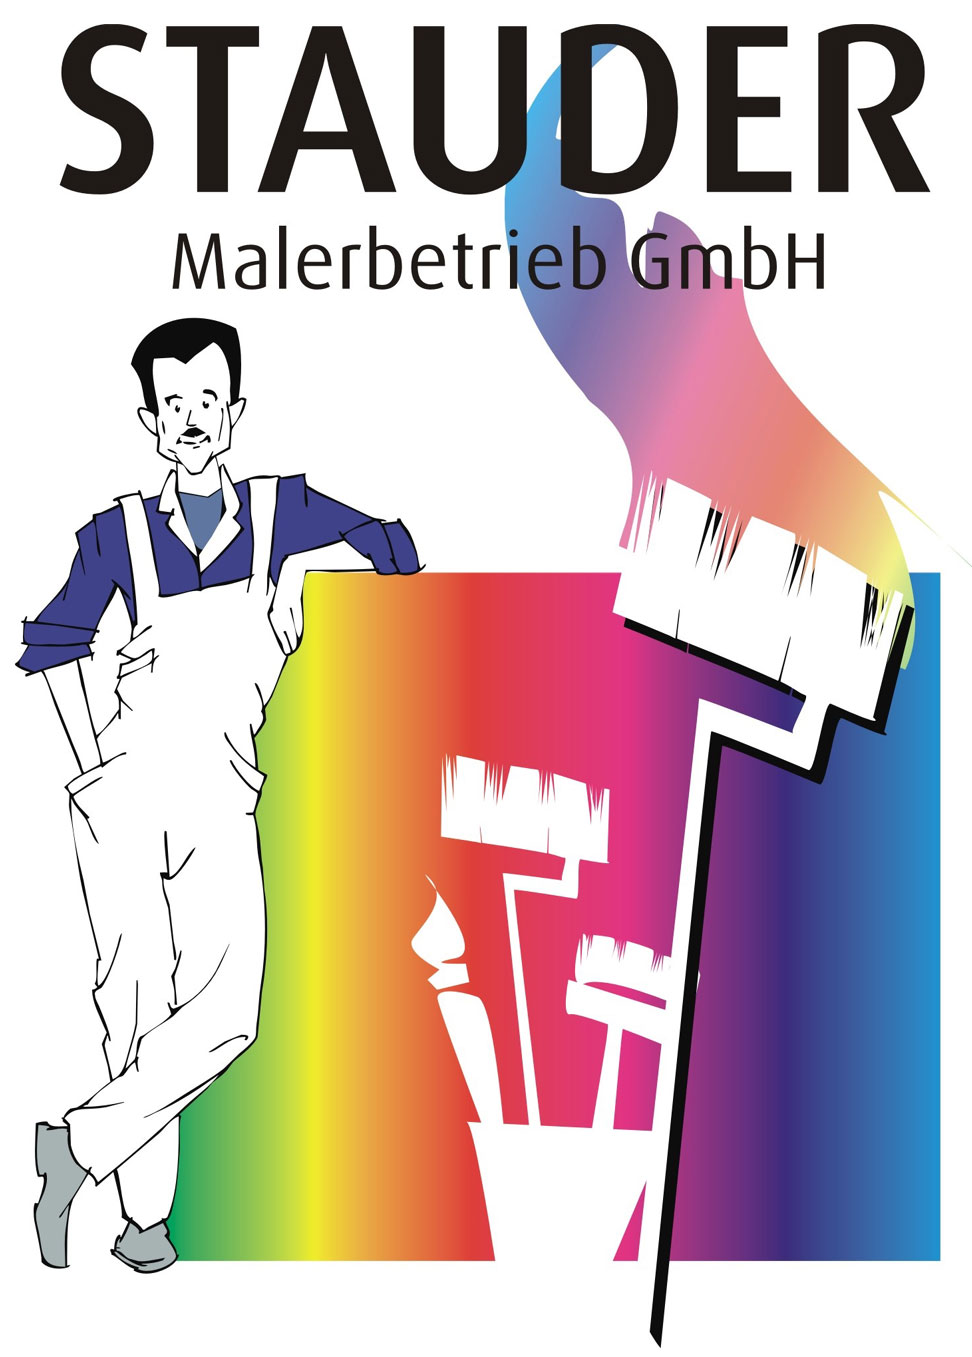 Stauder Malerbetrieb GmbH